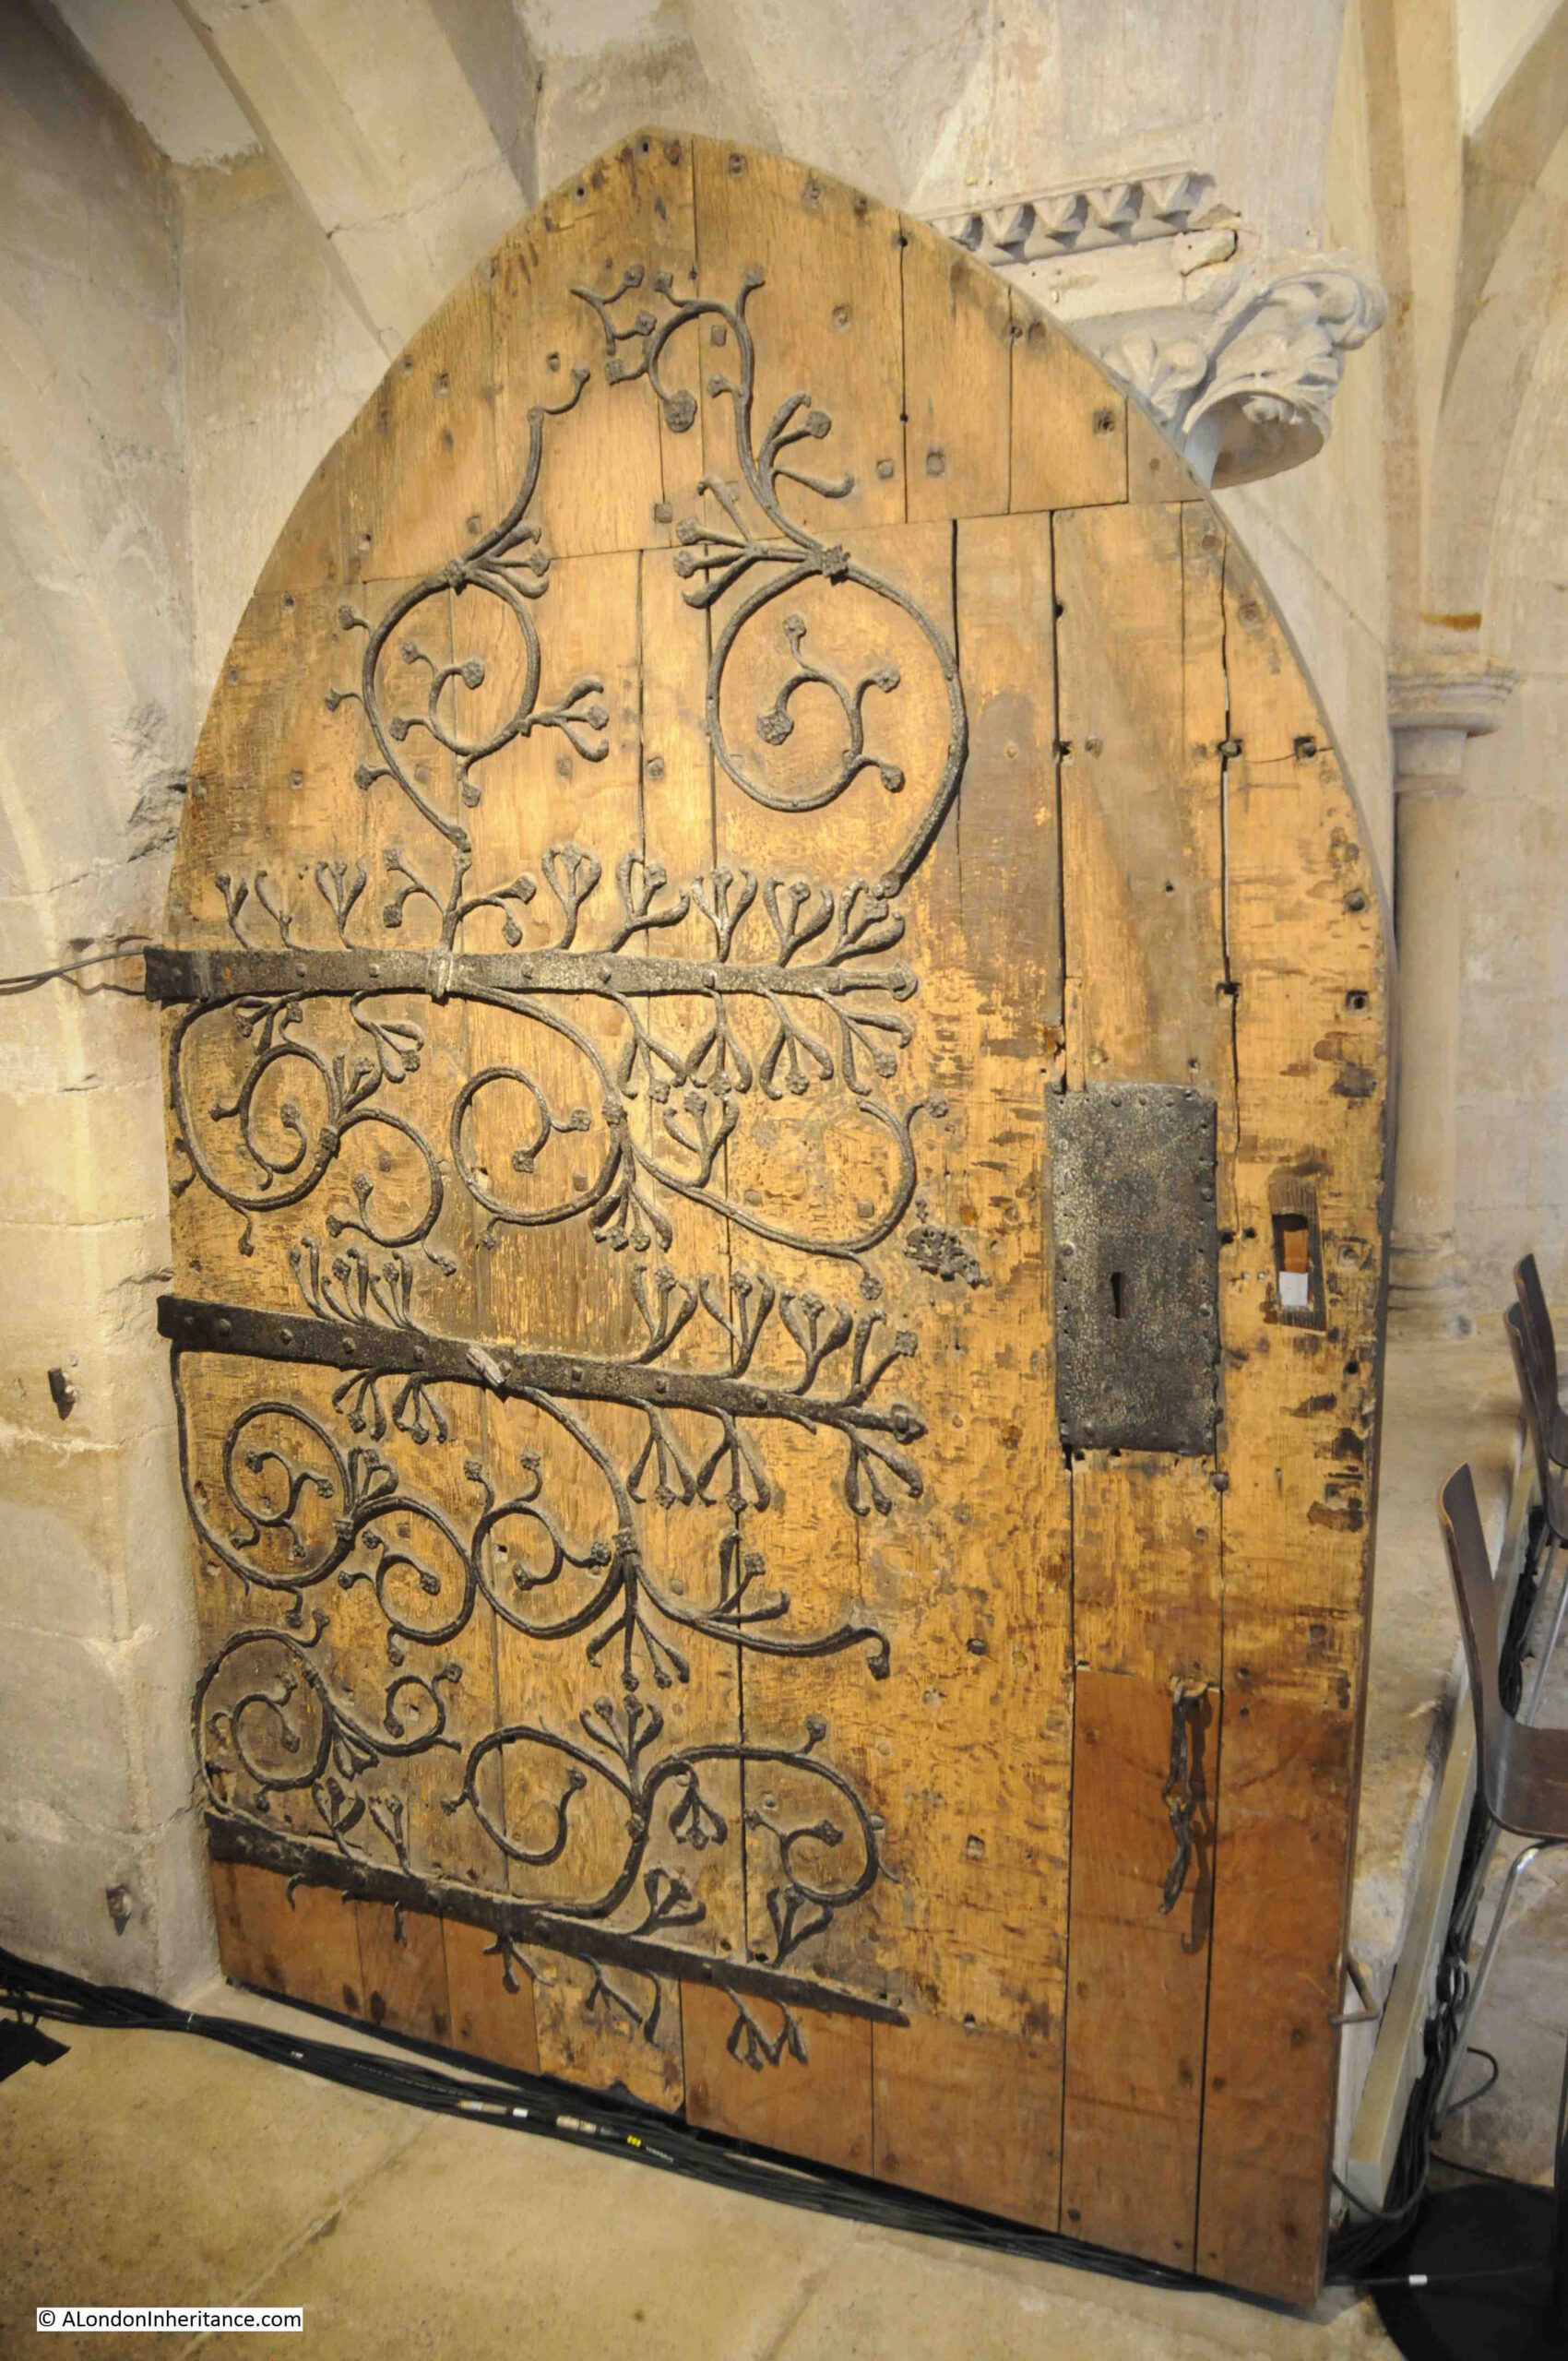 Old door with ornate ironwork